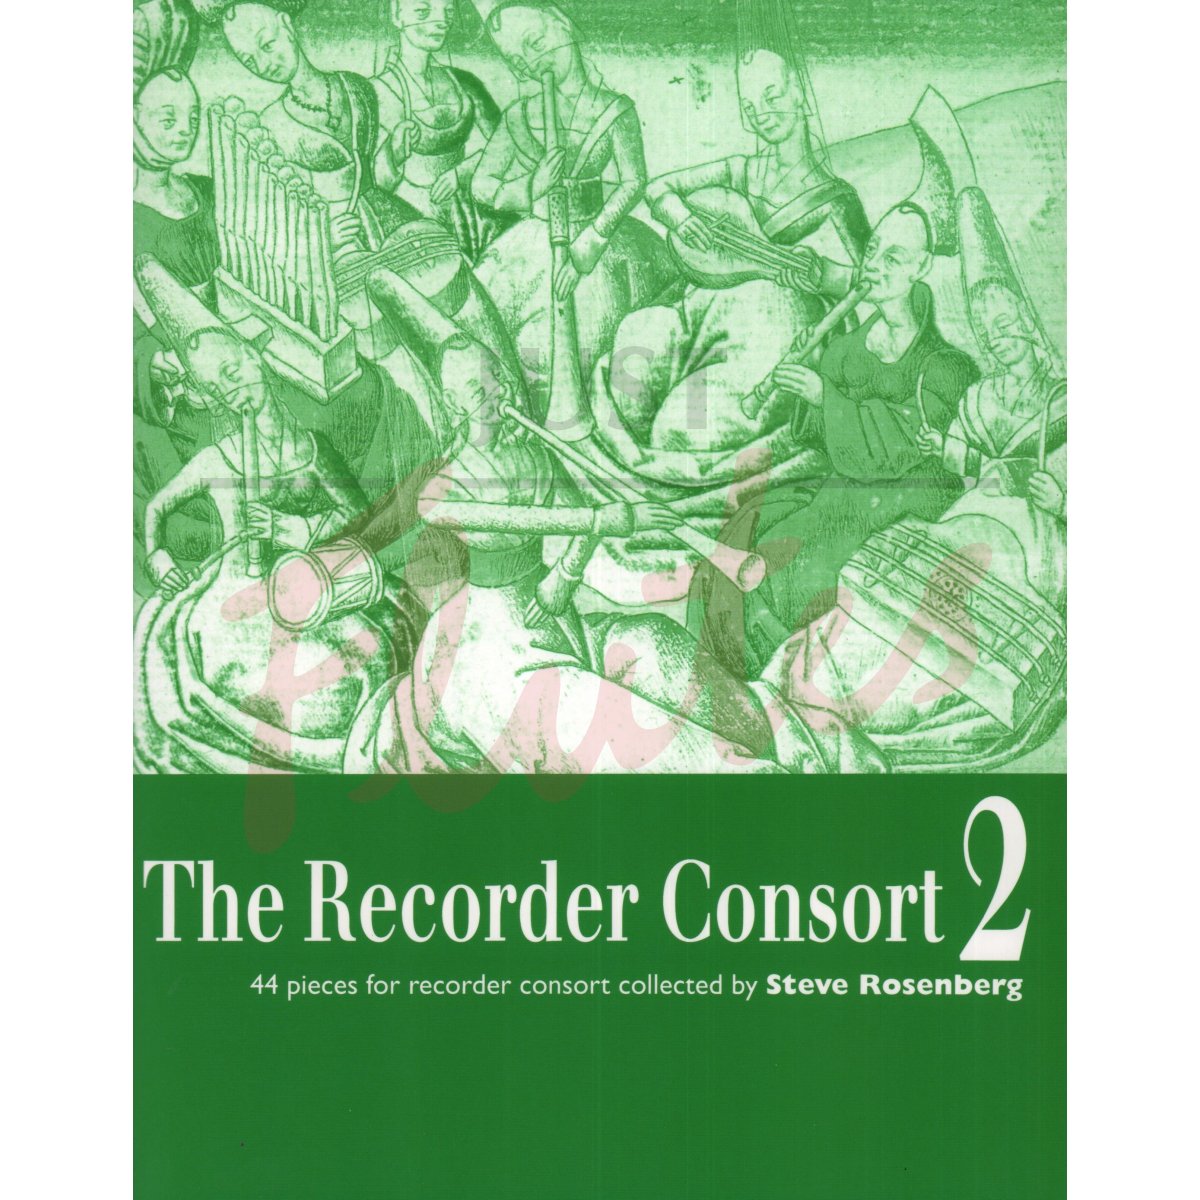 The Recorder Consort Volume 2